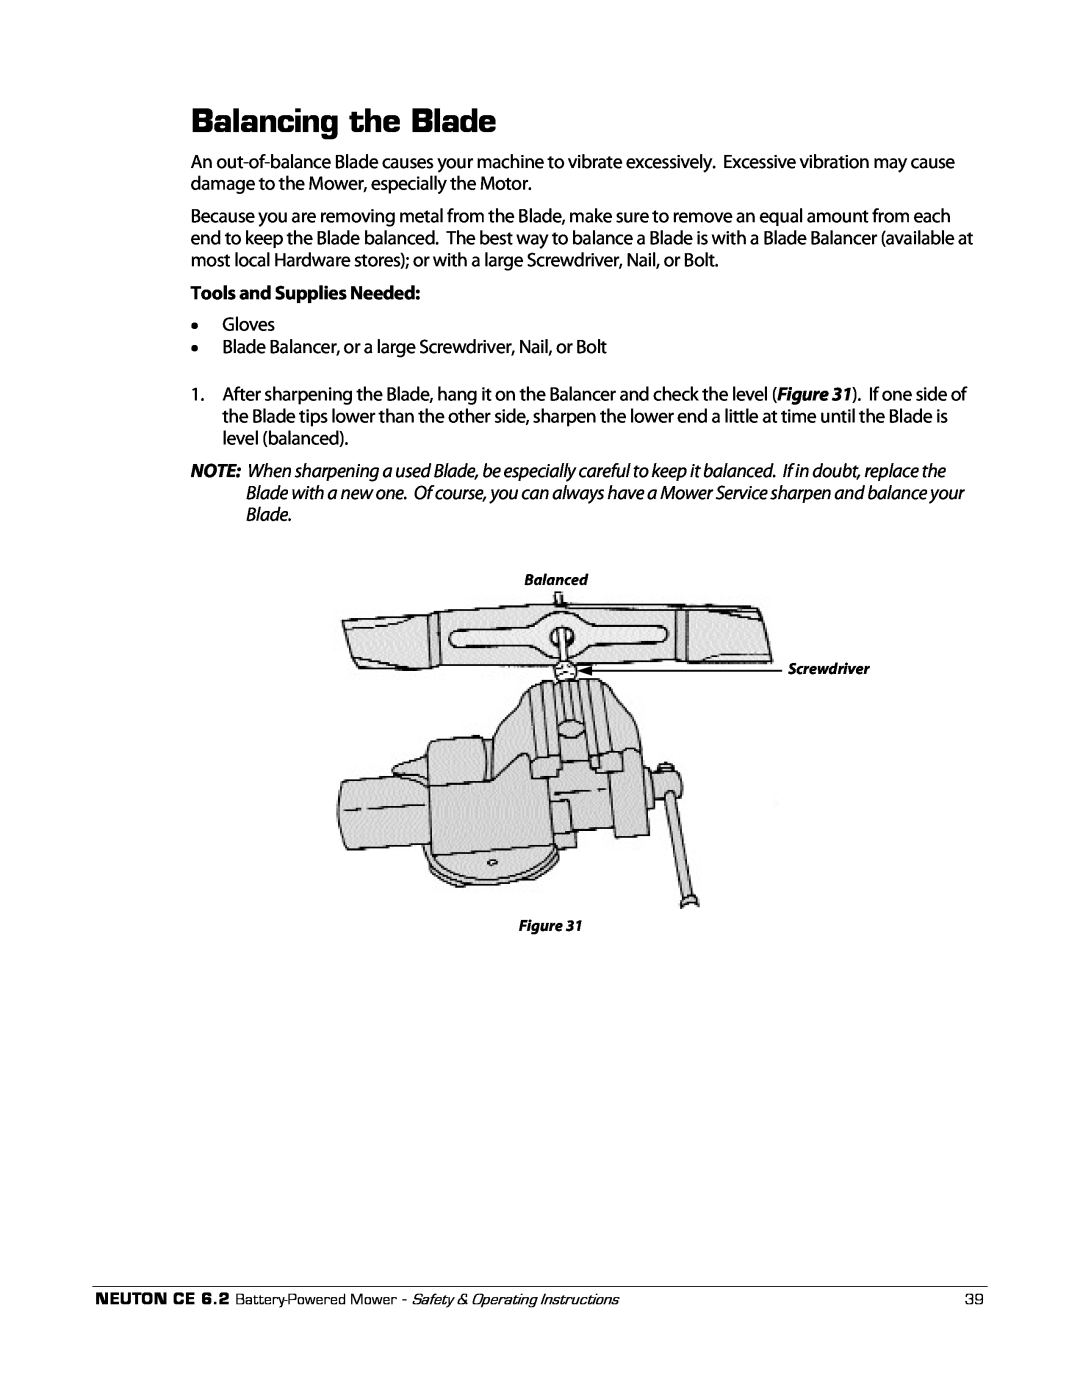 Neuton CE 6.2 manual Balancing the Blade 